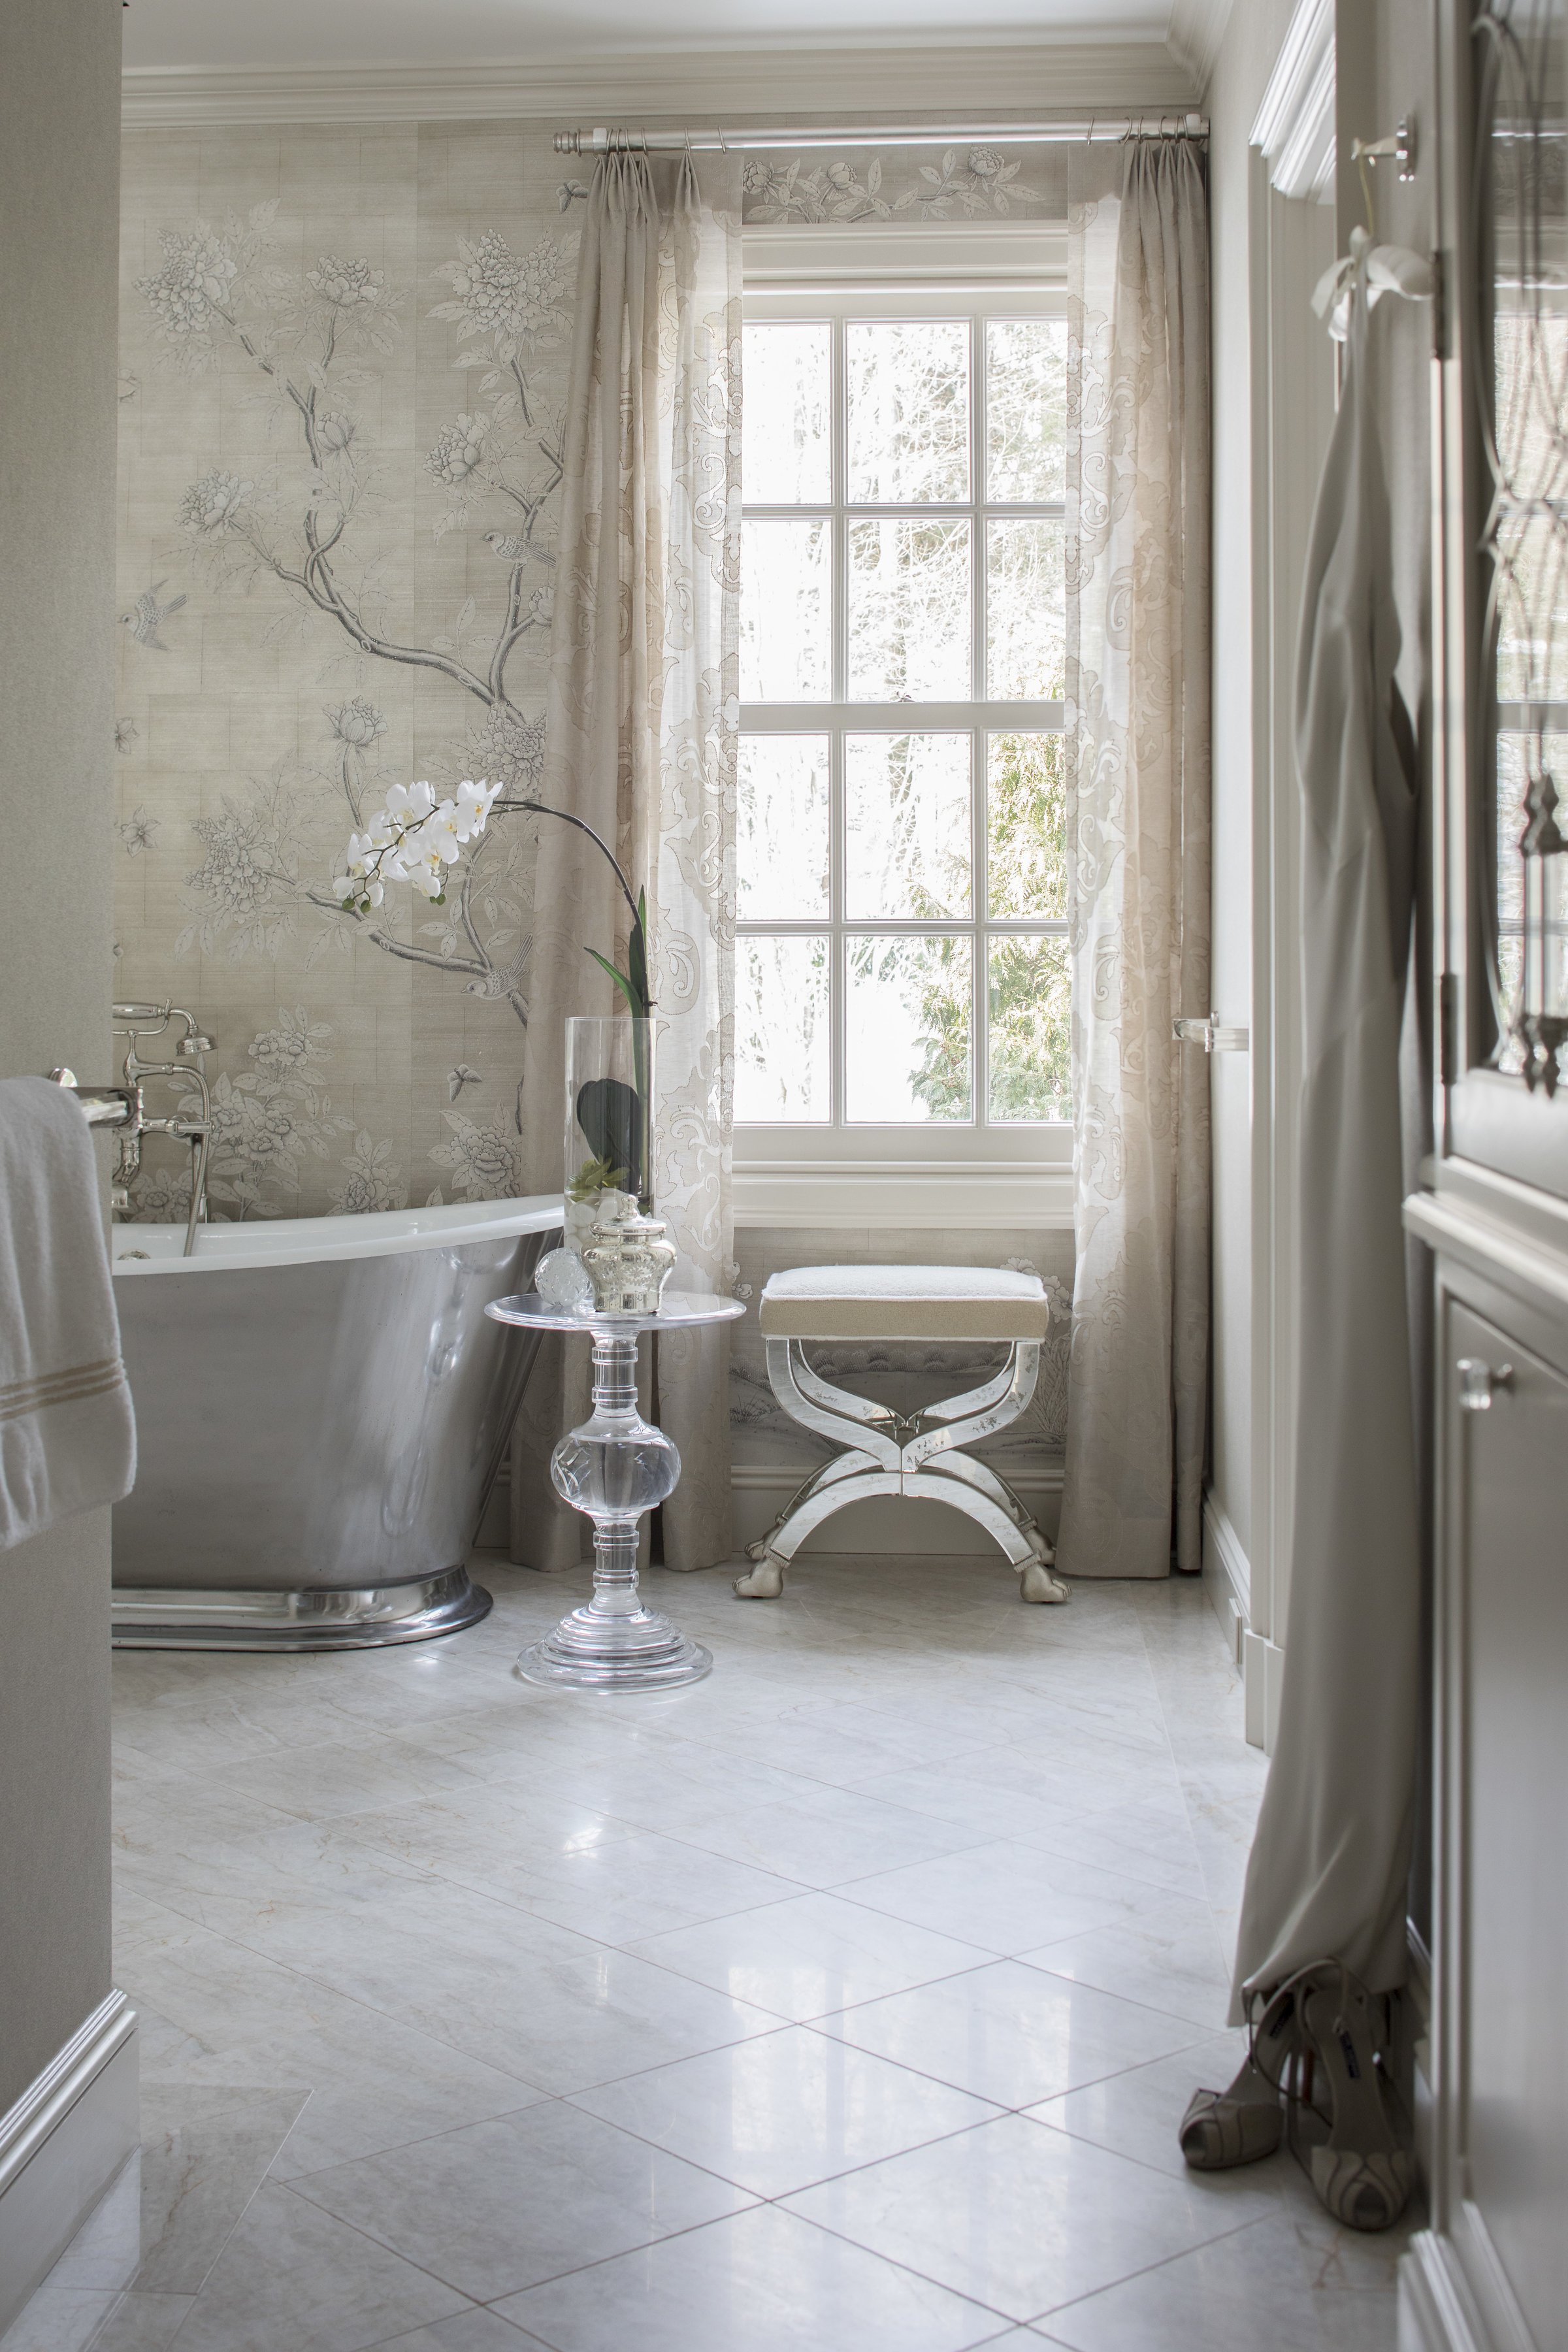 27-bathroom-wallpaper-freestanding-tub-drapes-rinfret-neoclassical-greenwich-connecticut.JPG